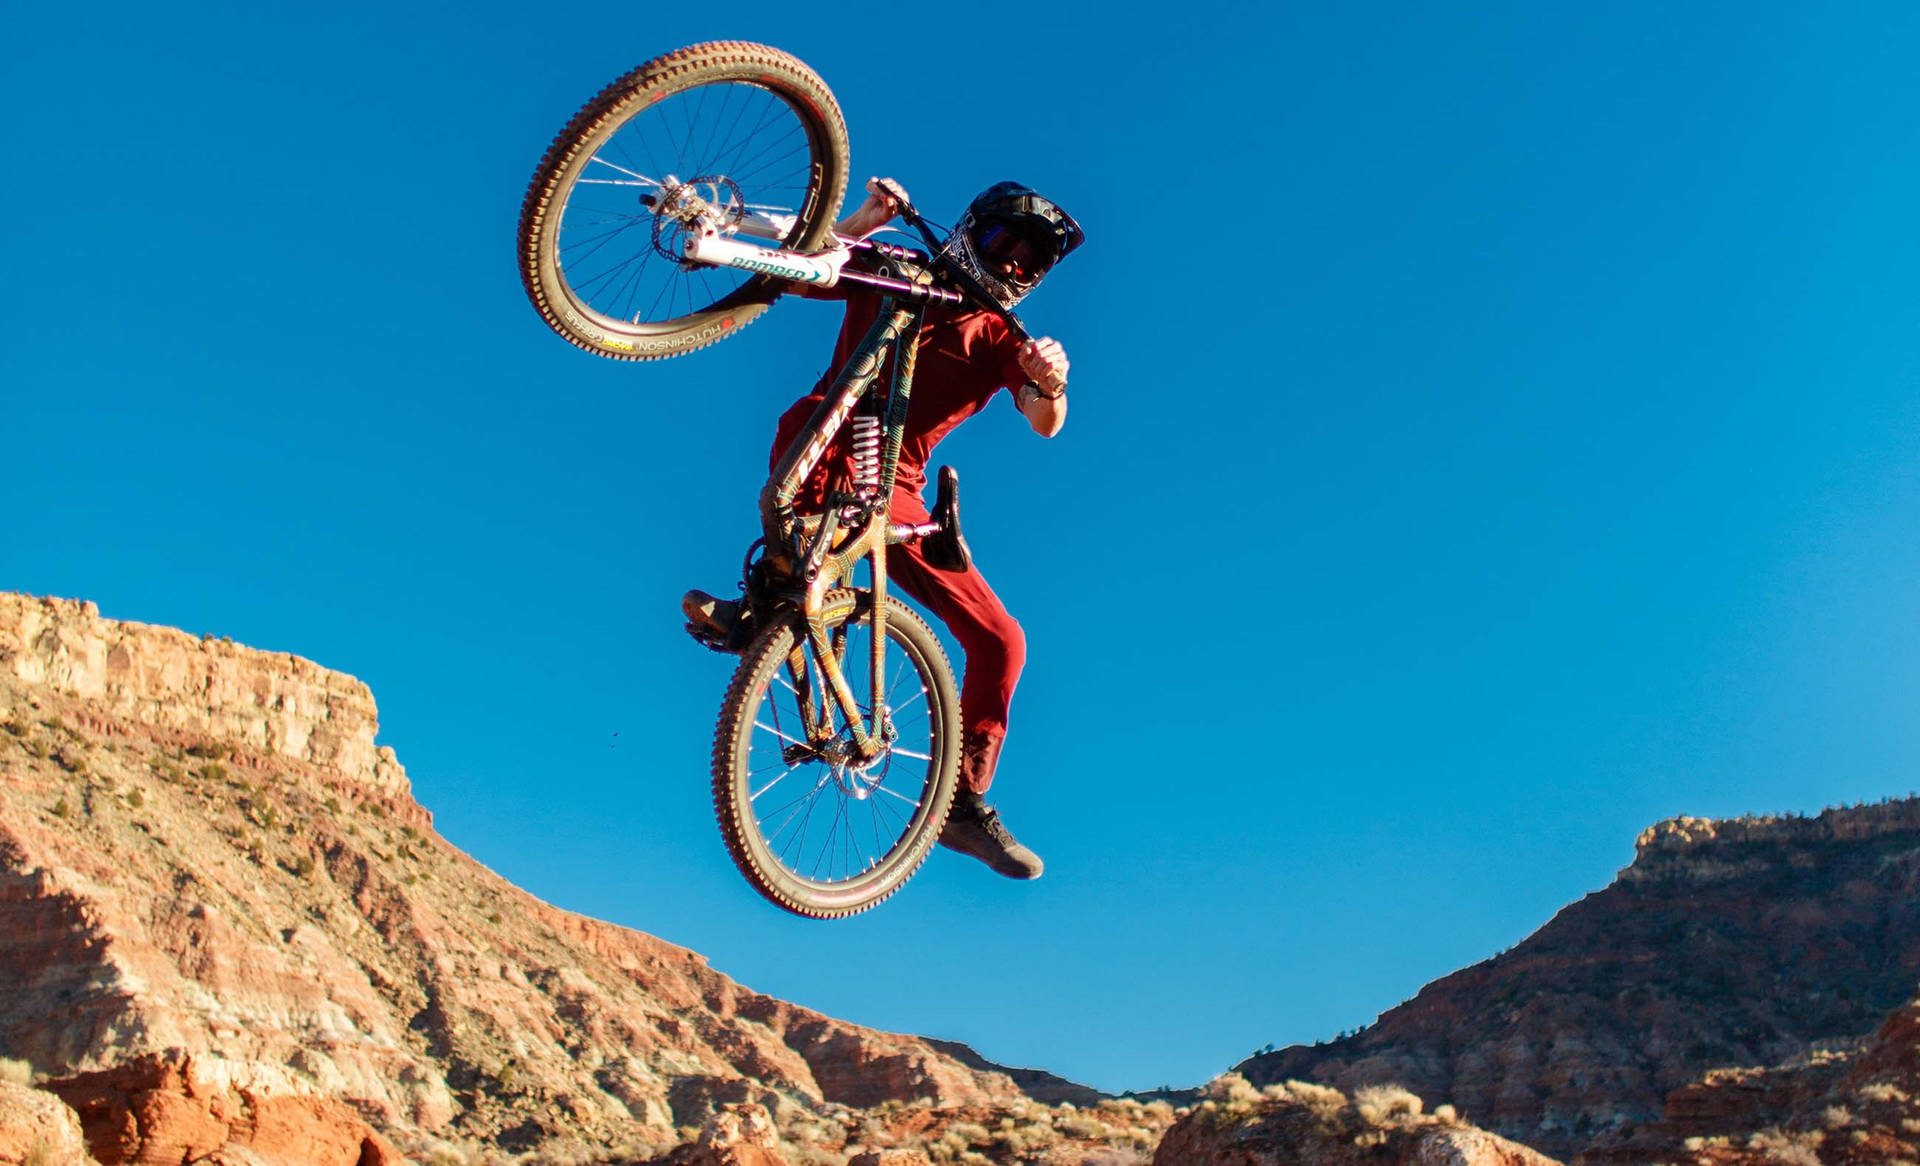 Cool Loose 4k Mountain Bike Trick Wallpaper